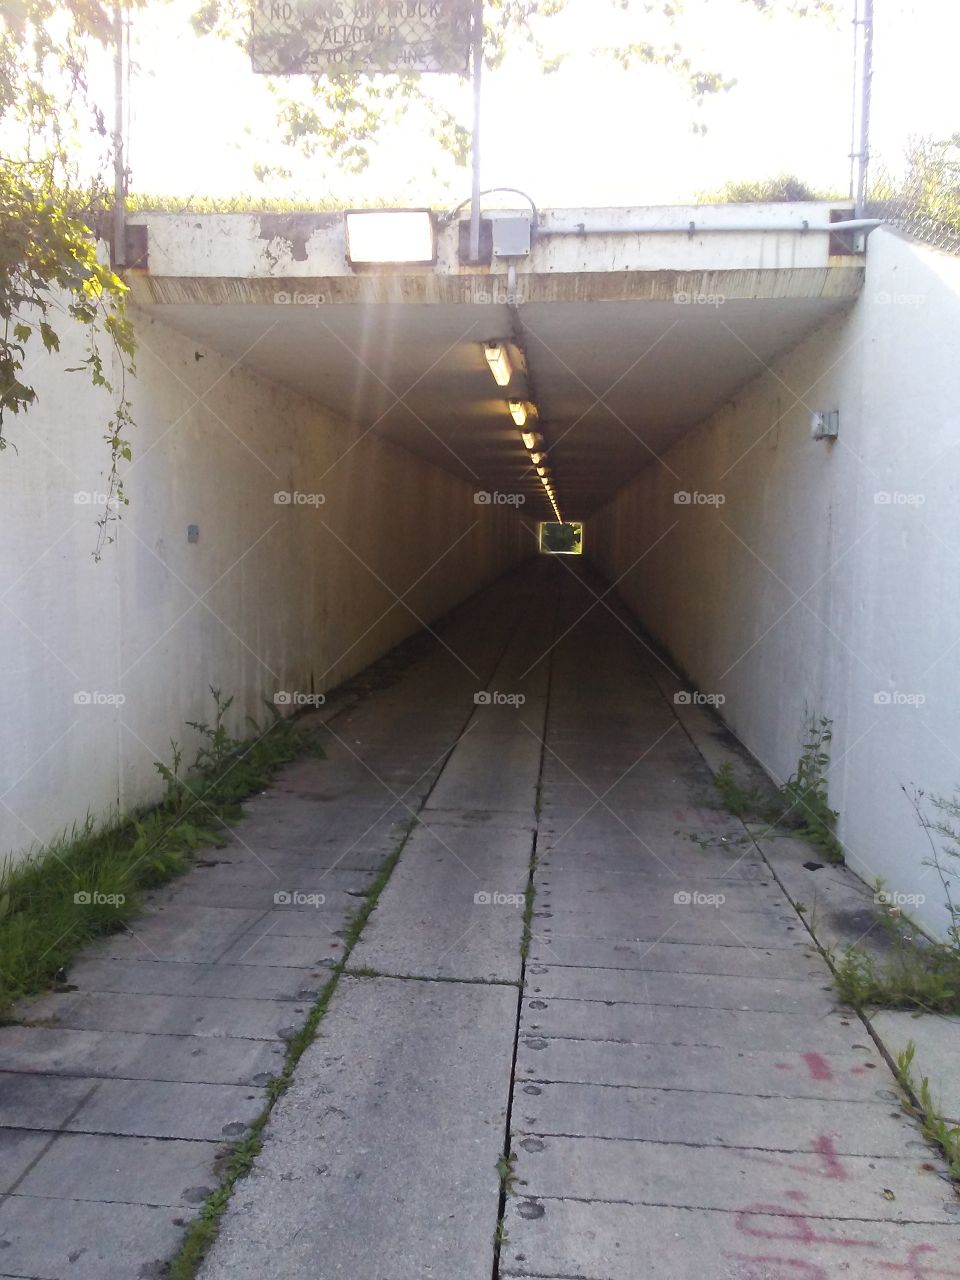 Inside the tunnel under I-43 in Sheboygan, Wisconsin.